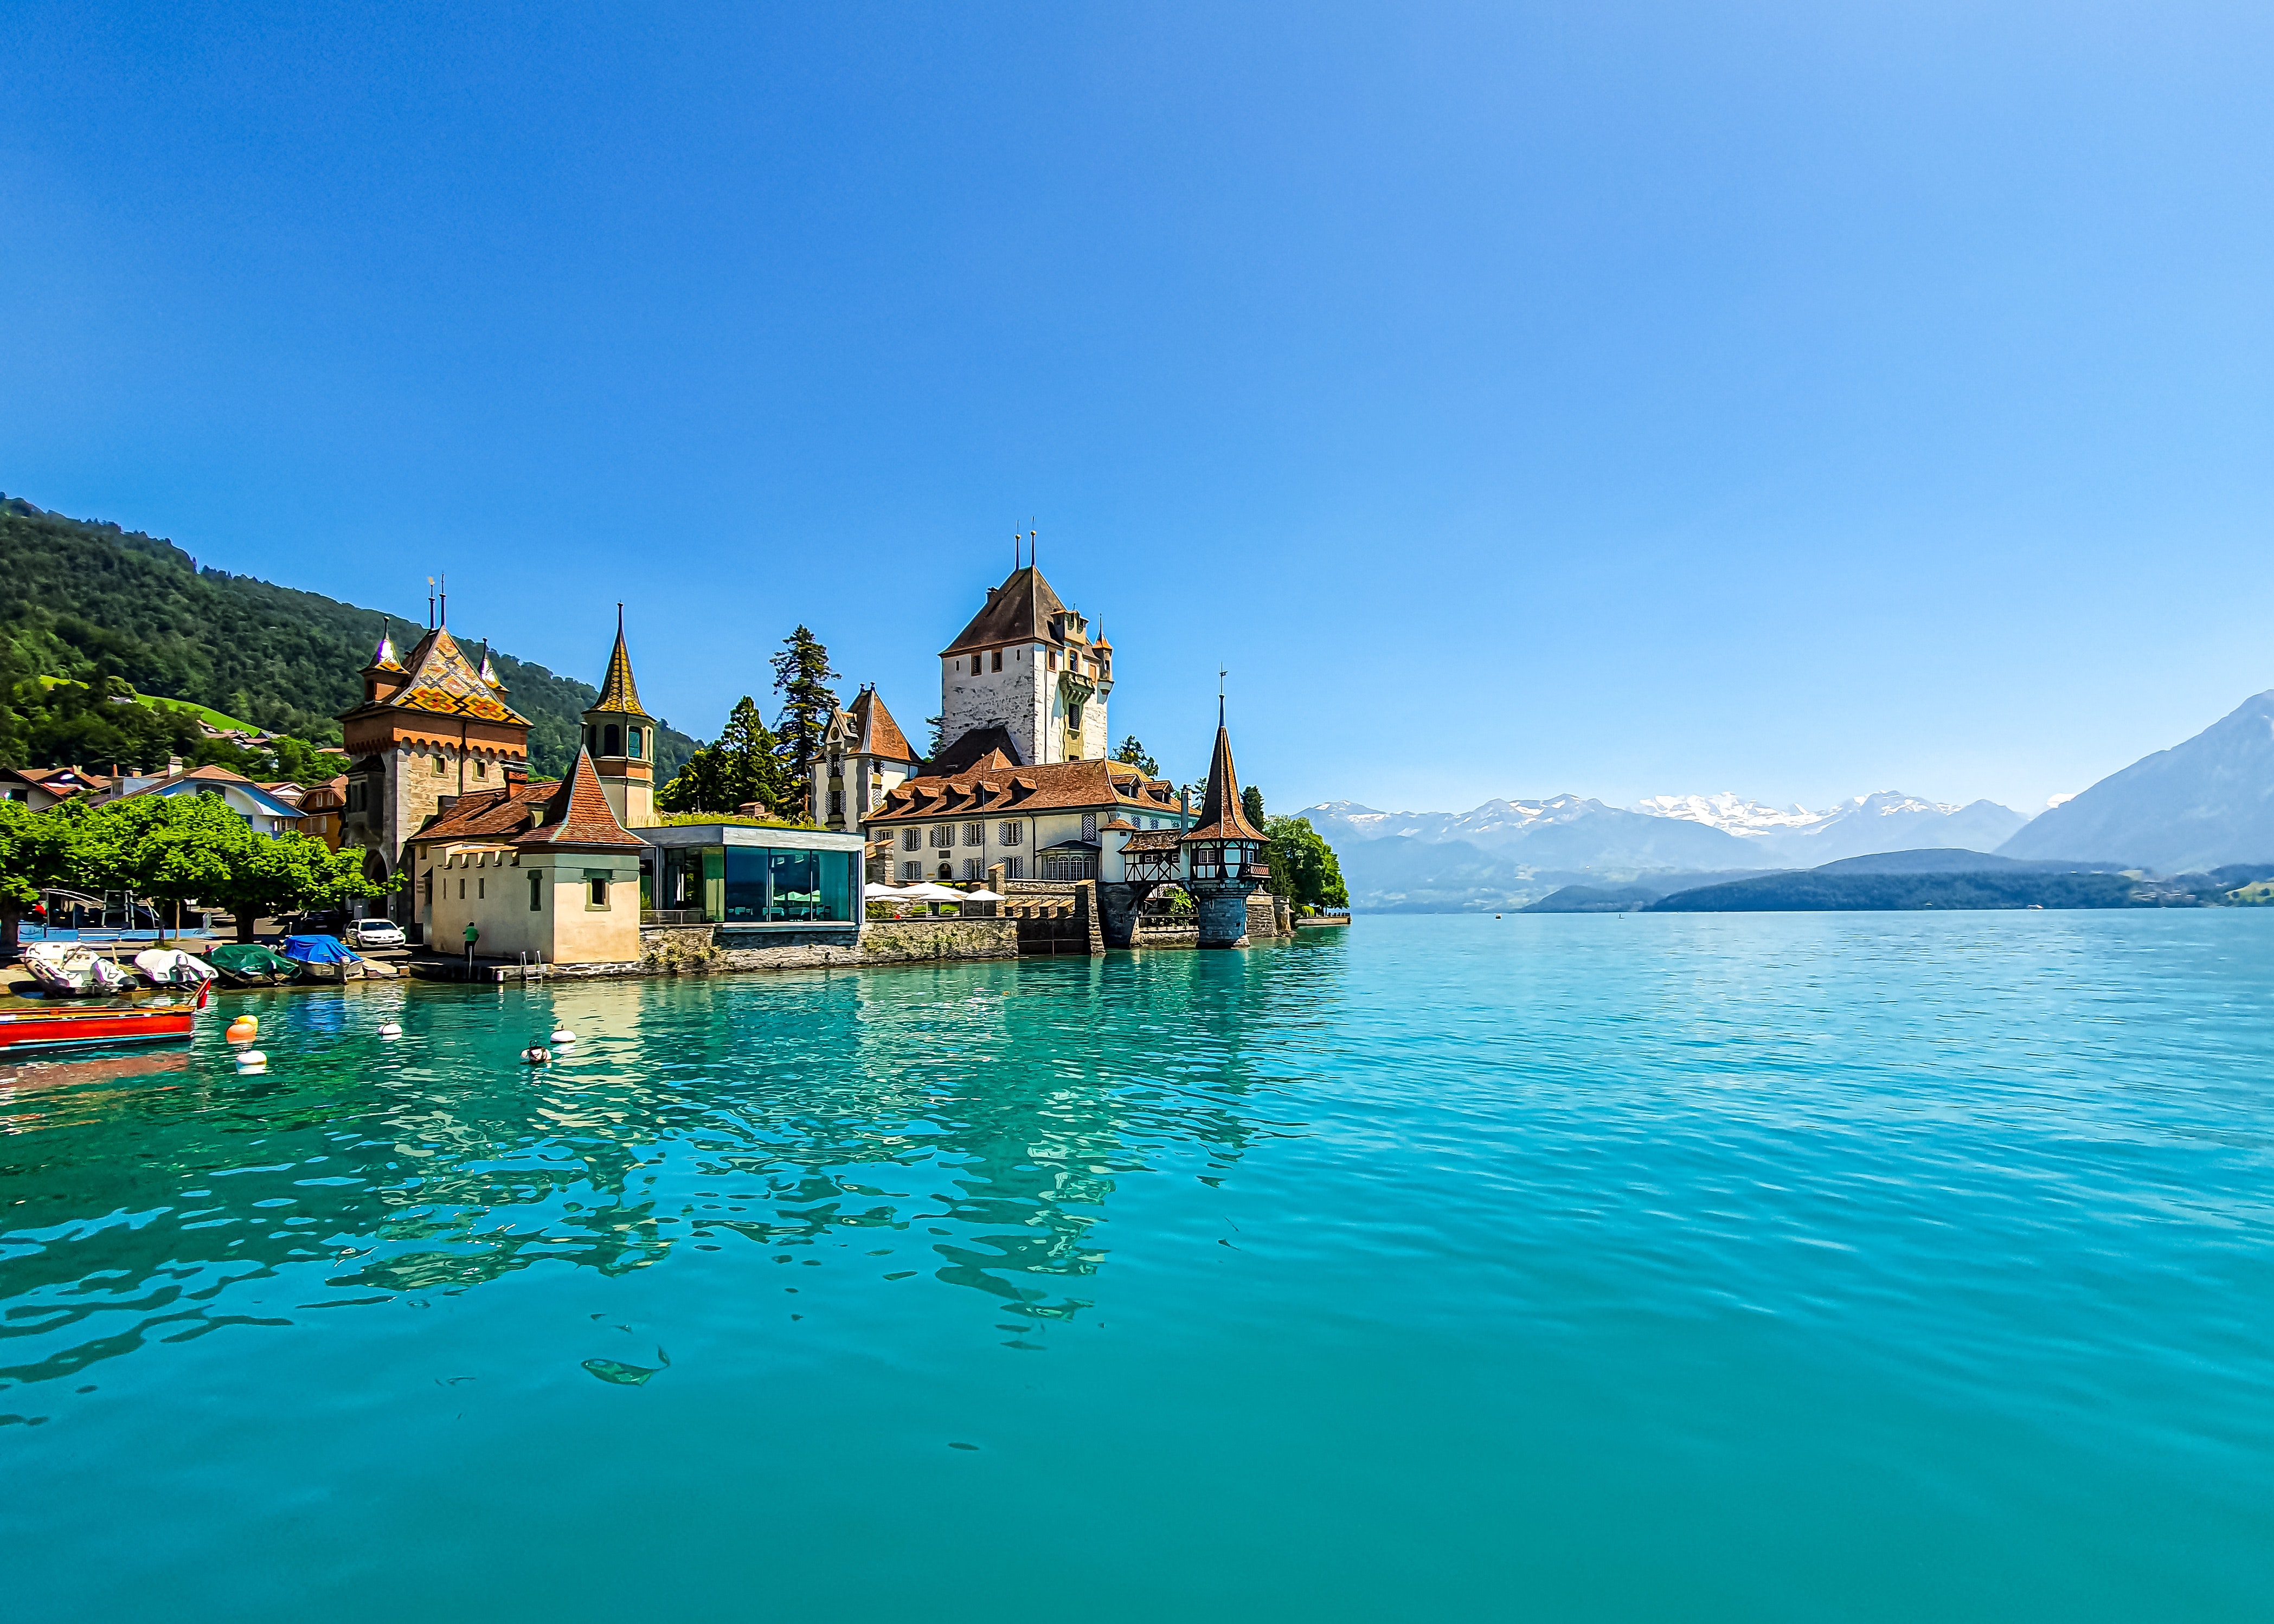 Switzerland photos download the best free switzerland stock photos hd images